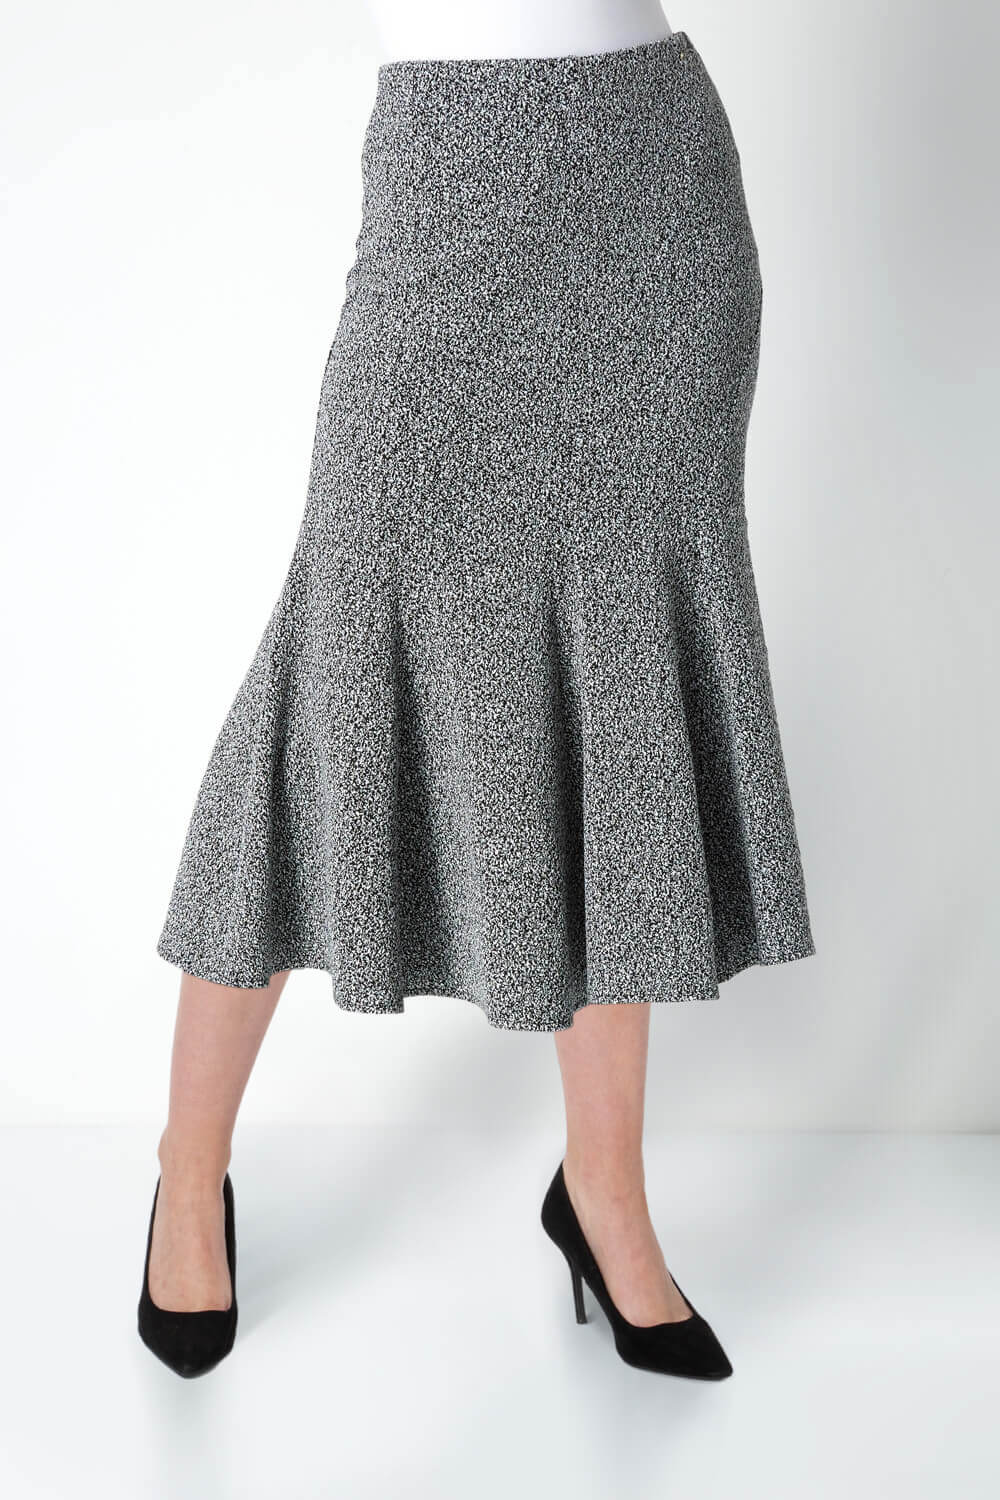 Texture Flared Skirt in Grey - Roman Originals UK